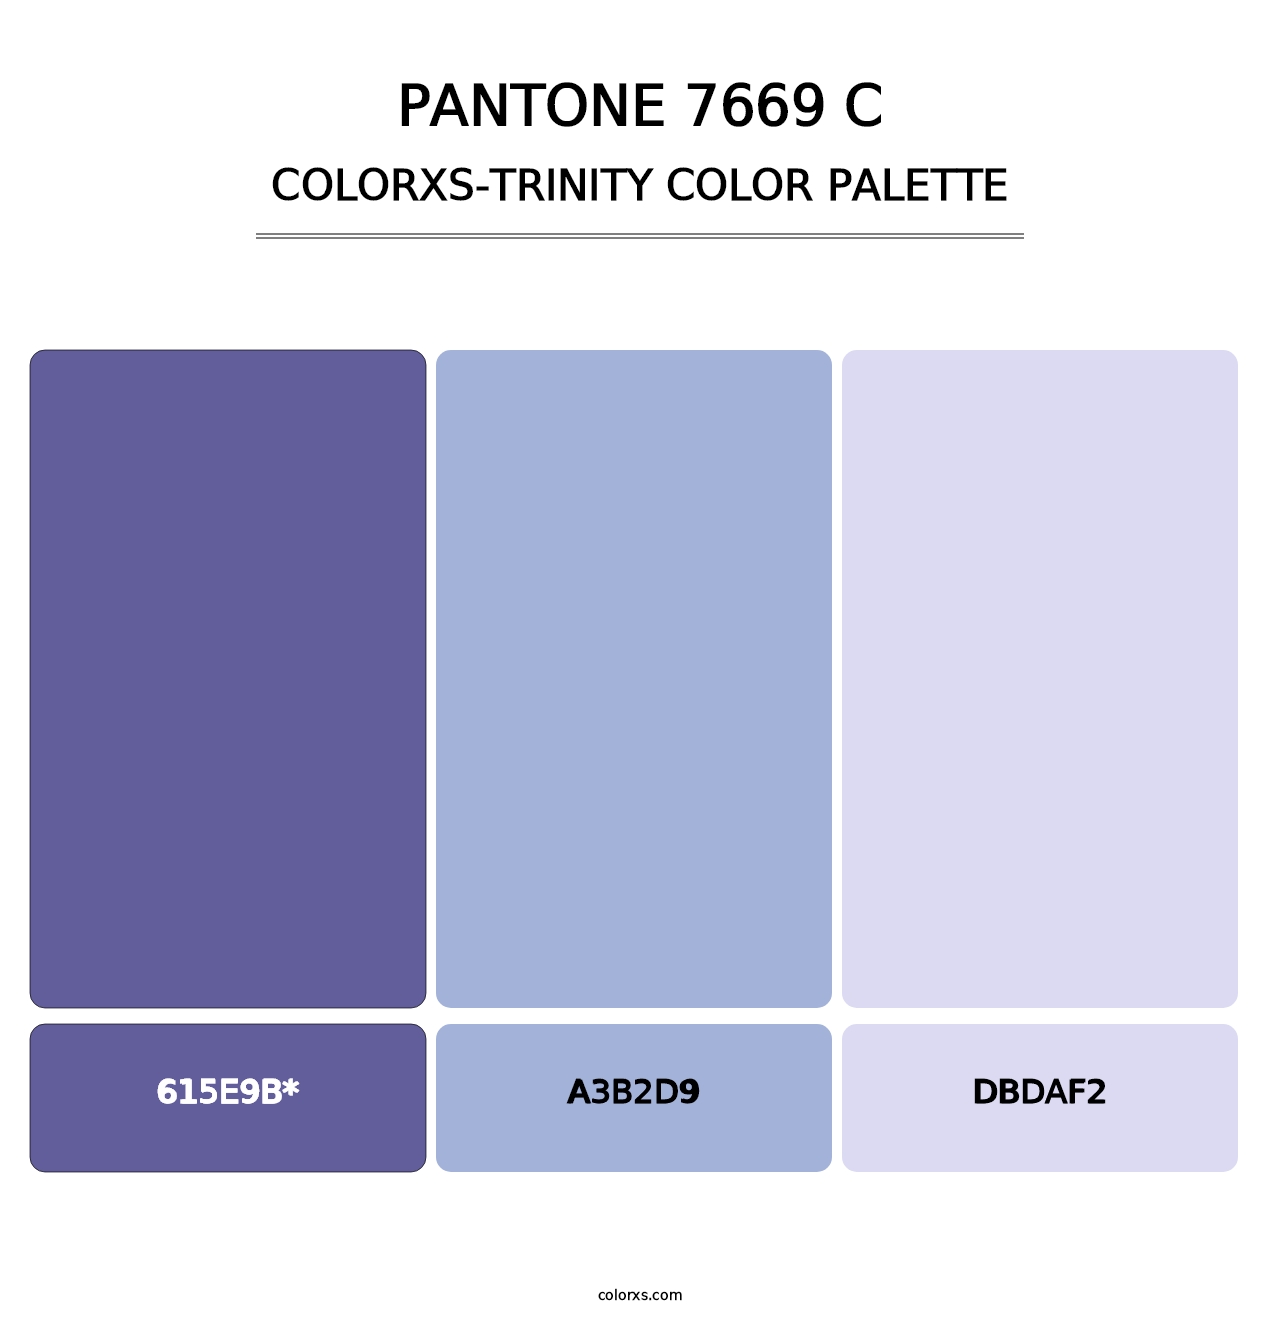 PANTONE 7669 C - Colorxs Trinity Palette